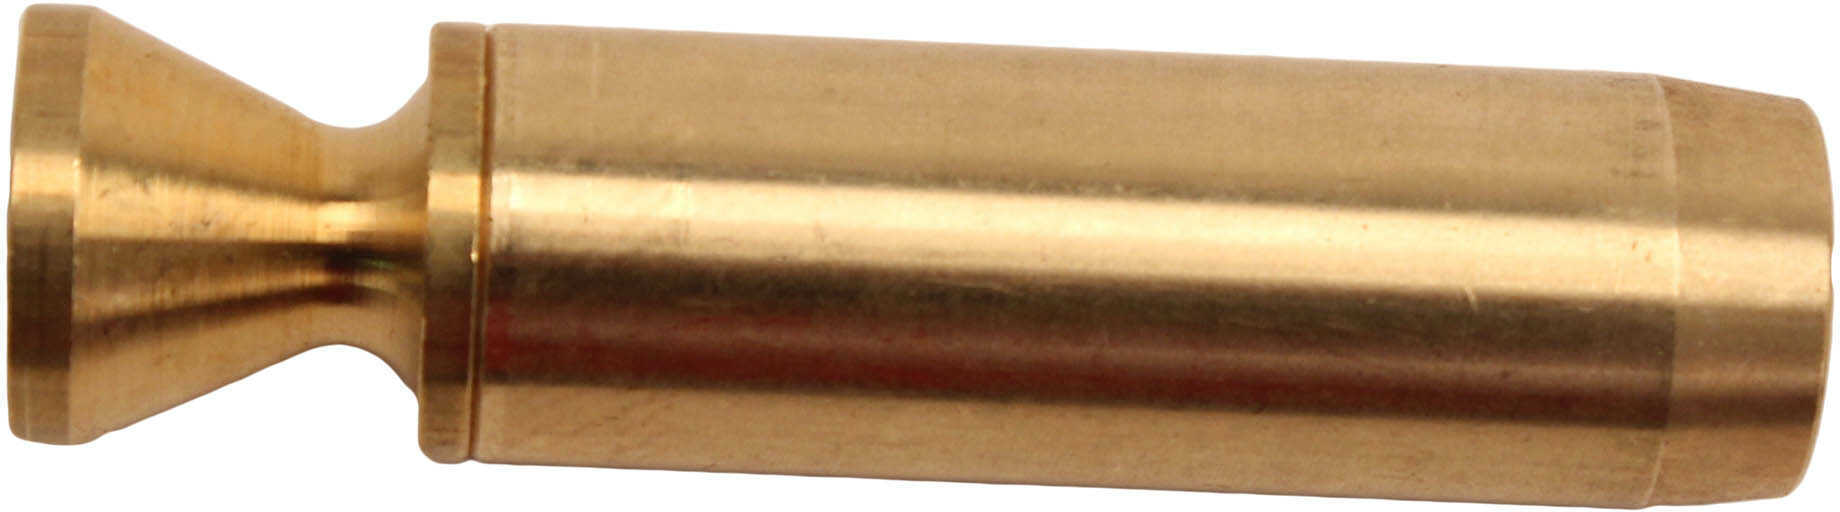 Thompson/Center Arms Magnum Powder Measure Brass 7102